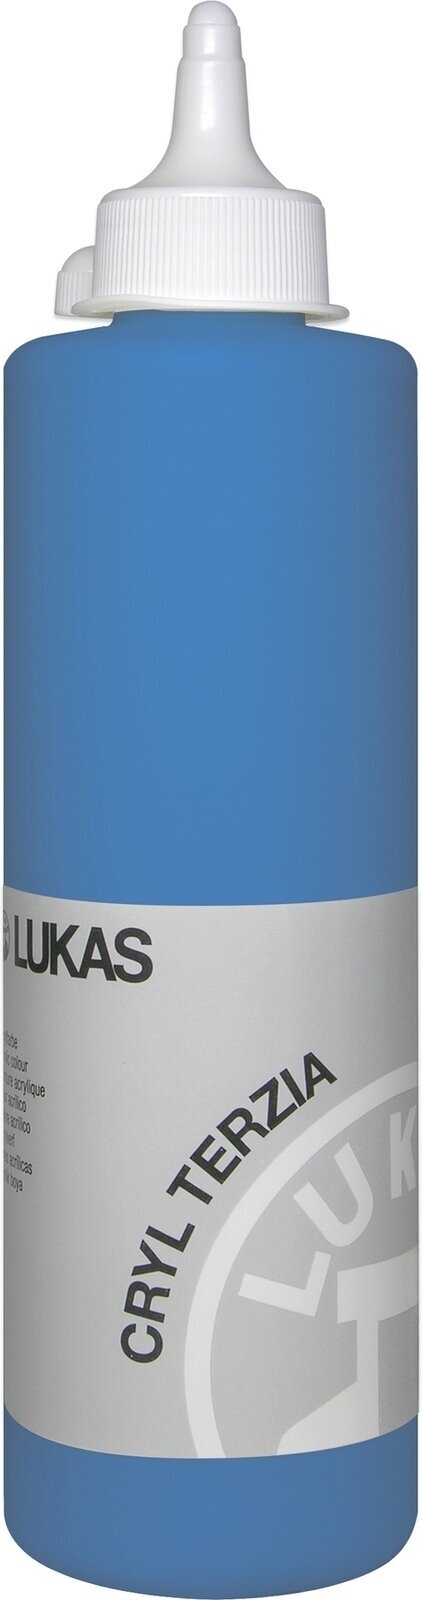 Akrylová barva Lukas Cryl Terzia Acrylic Paint Plastic Bottle Akrylová barva Primary Blue 500 ml 1 ks